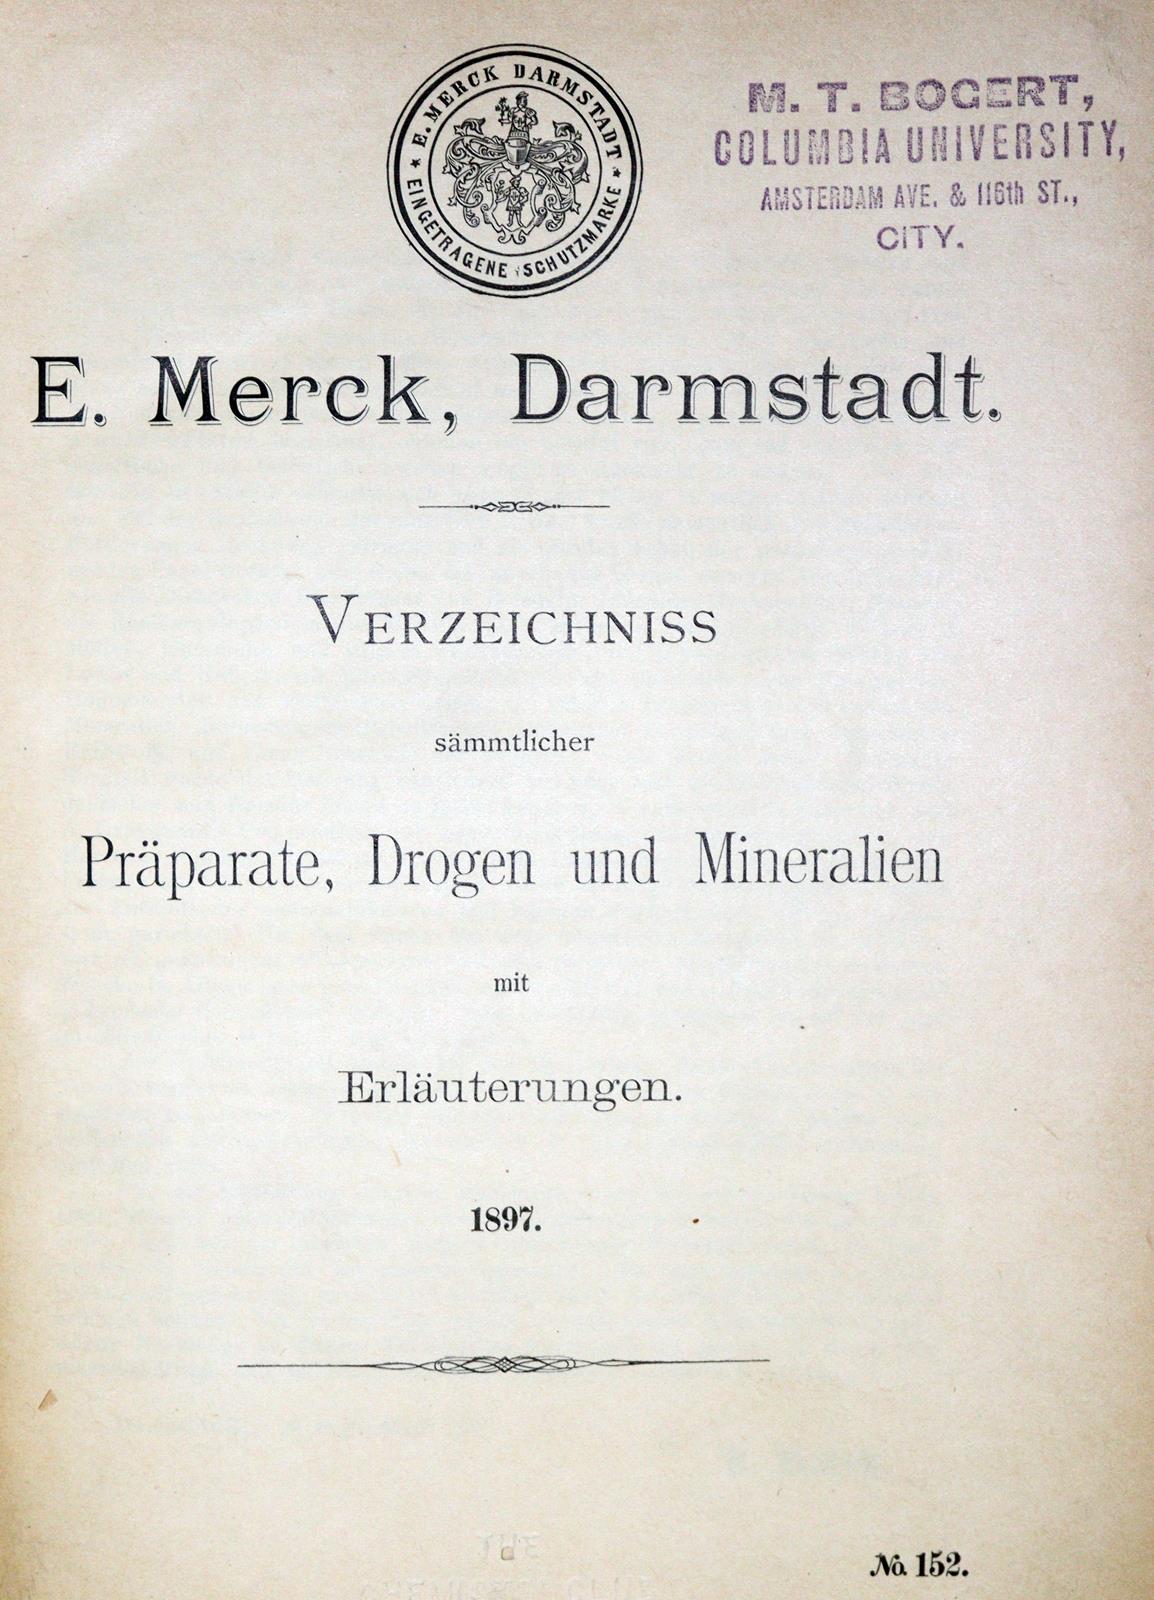 Merck,E. | Bild Nr.1